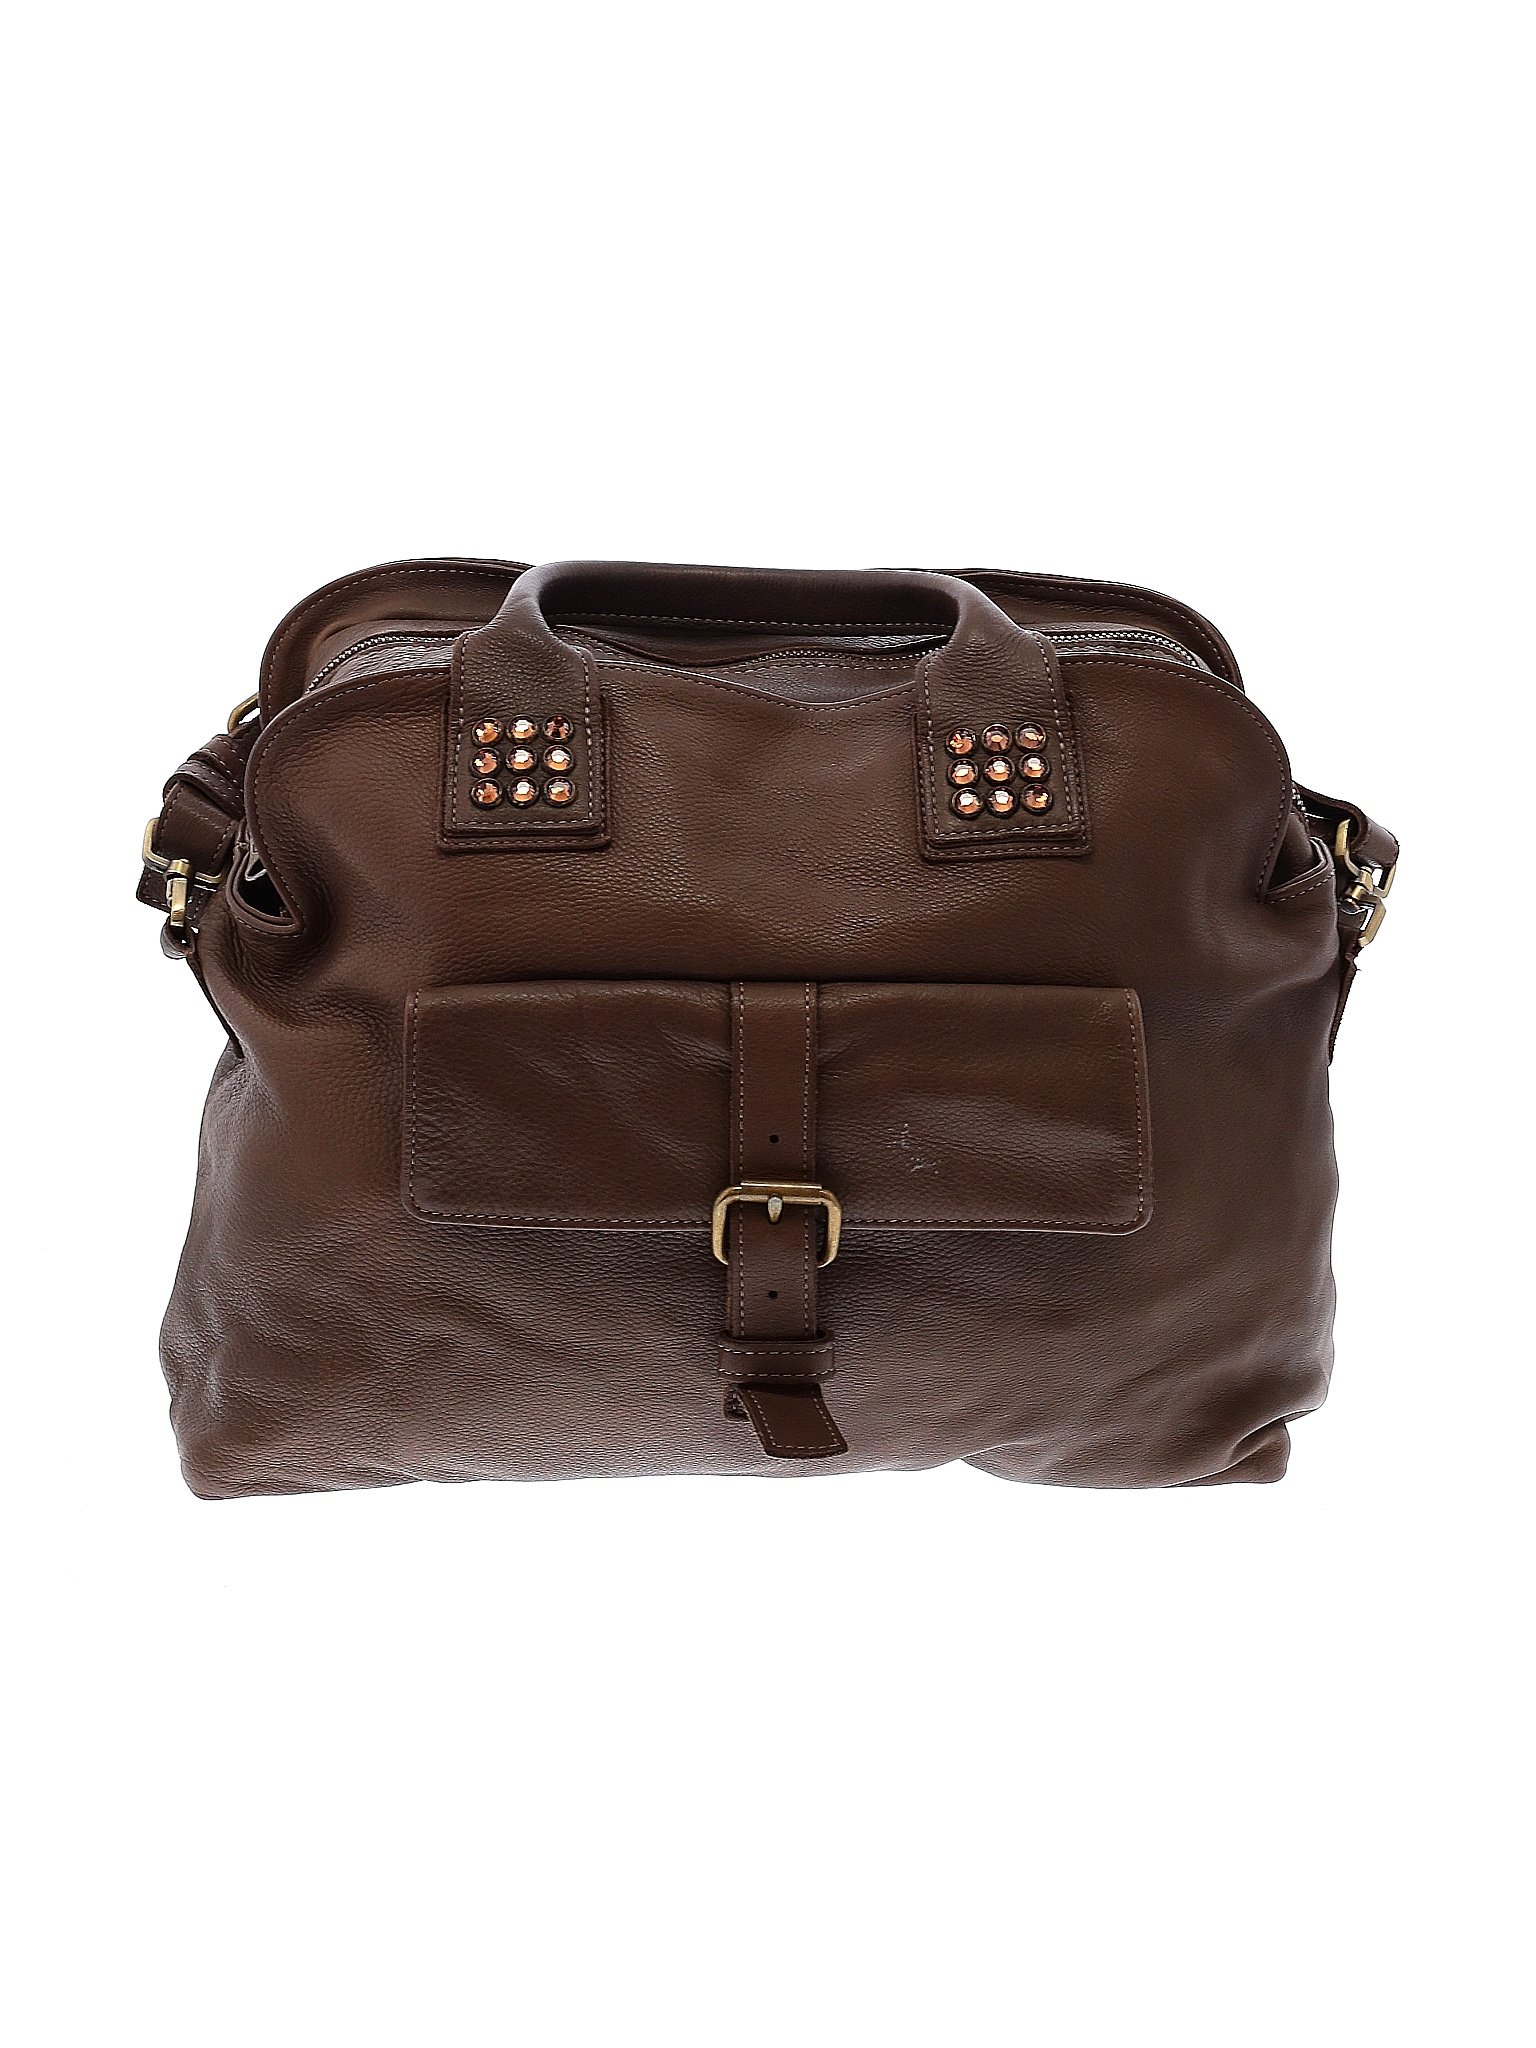 Tylie Malibu Handbags On Sale Up To 90% Off Retail | thredUP